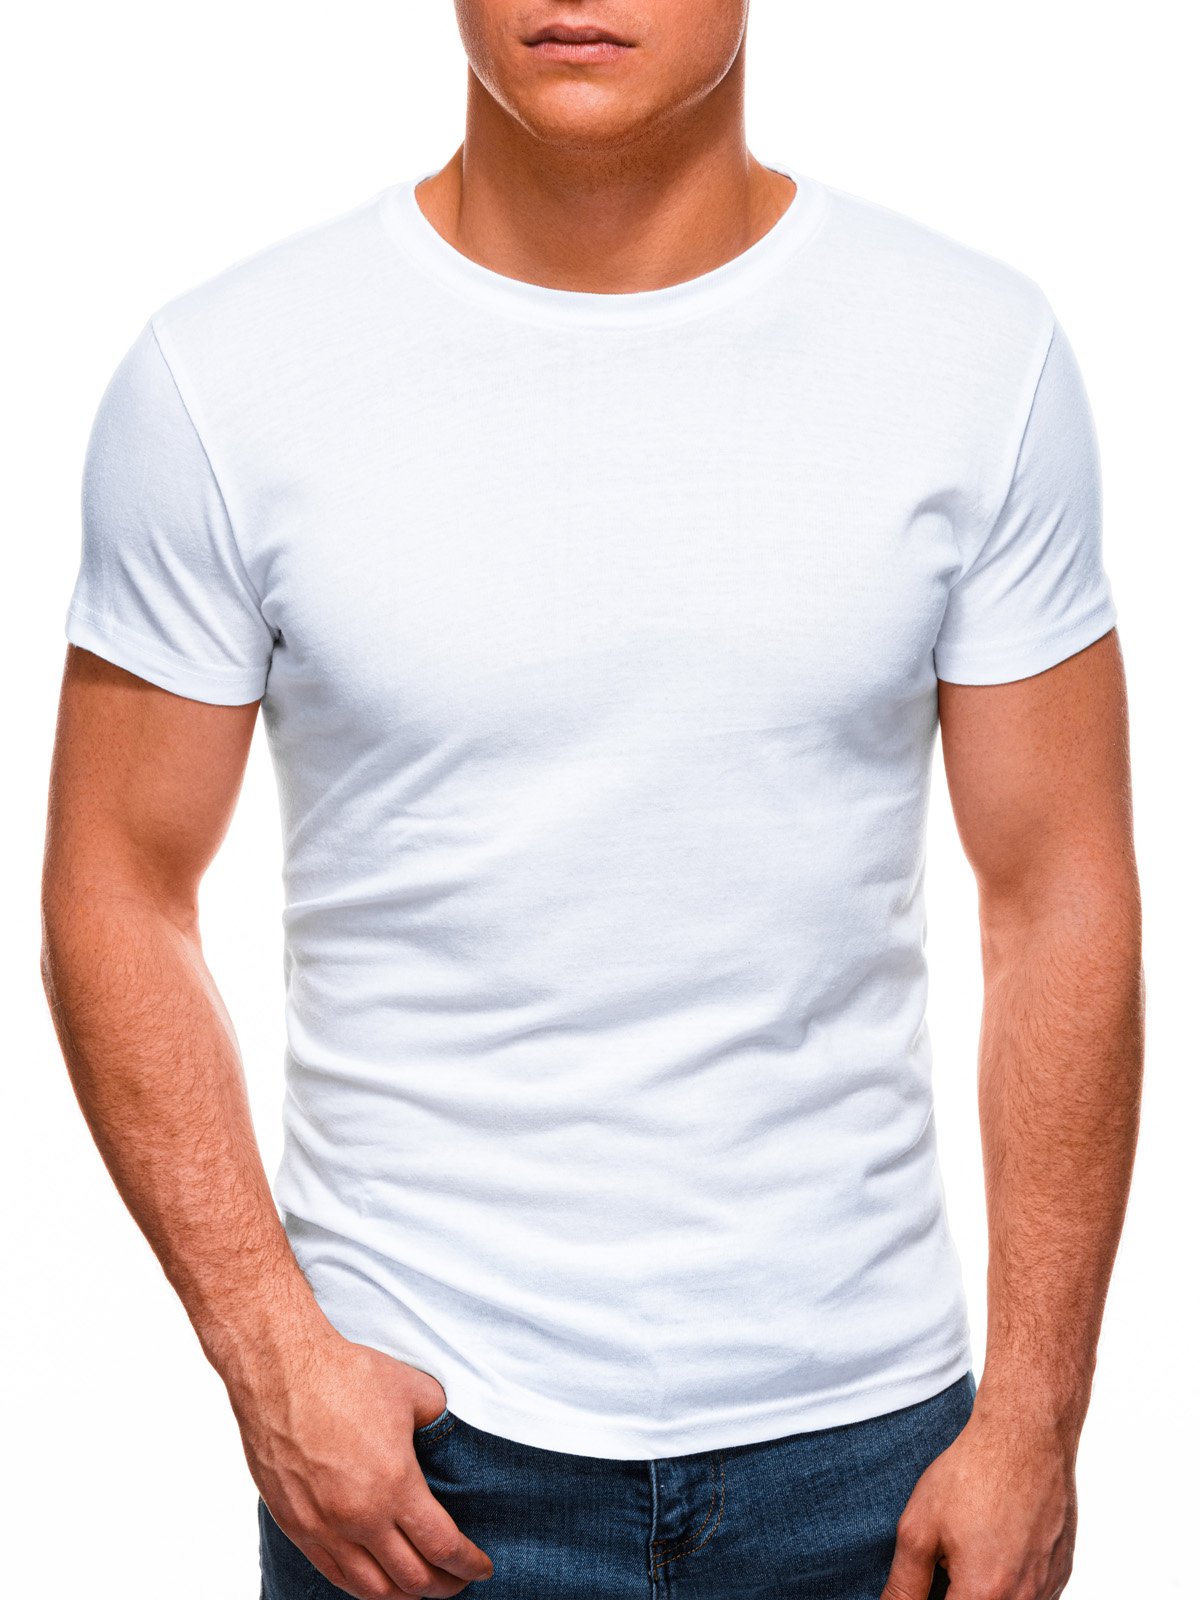 Men's plain t-shirt S970 - white | MODONE wholesale - Clothing For Men